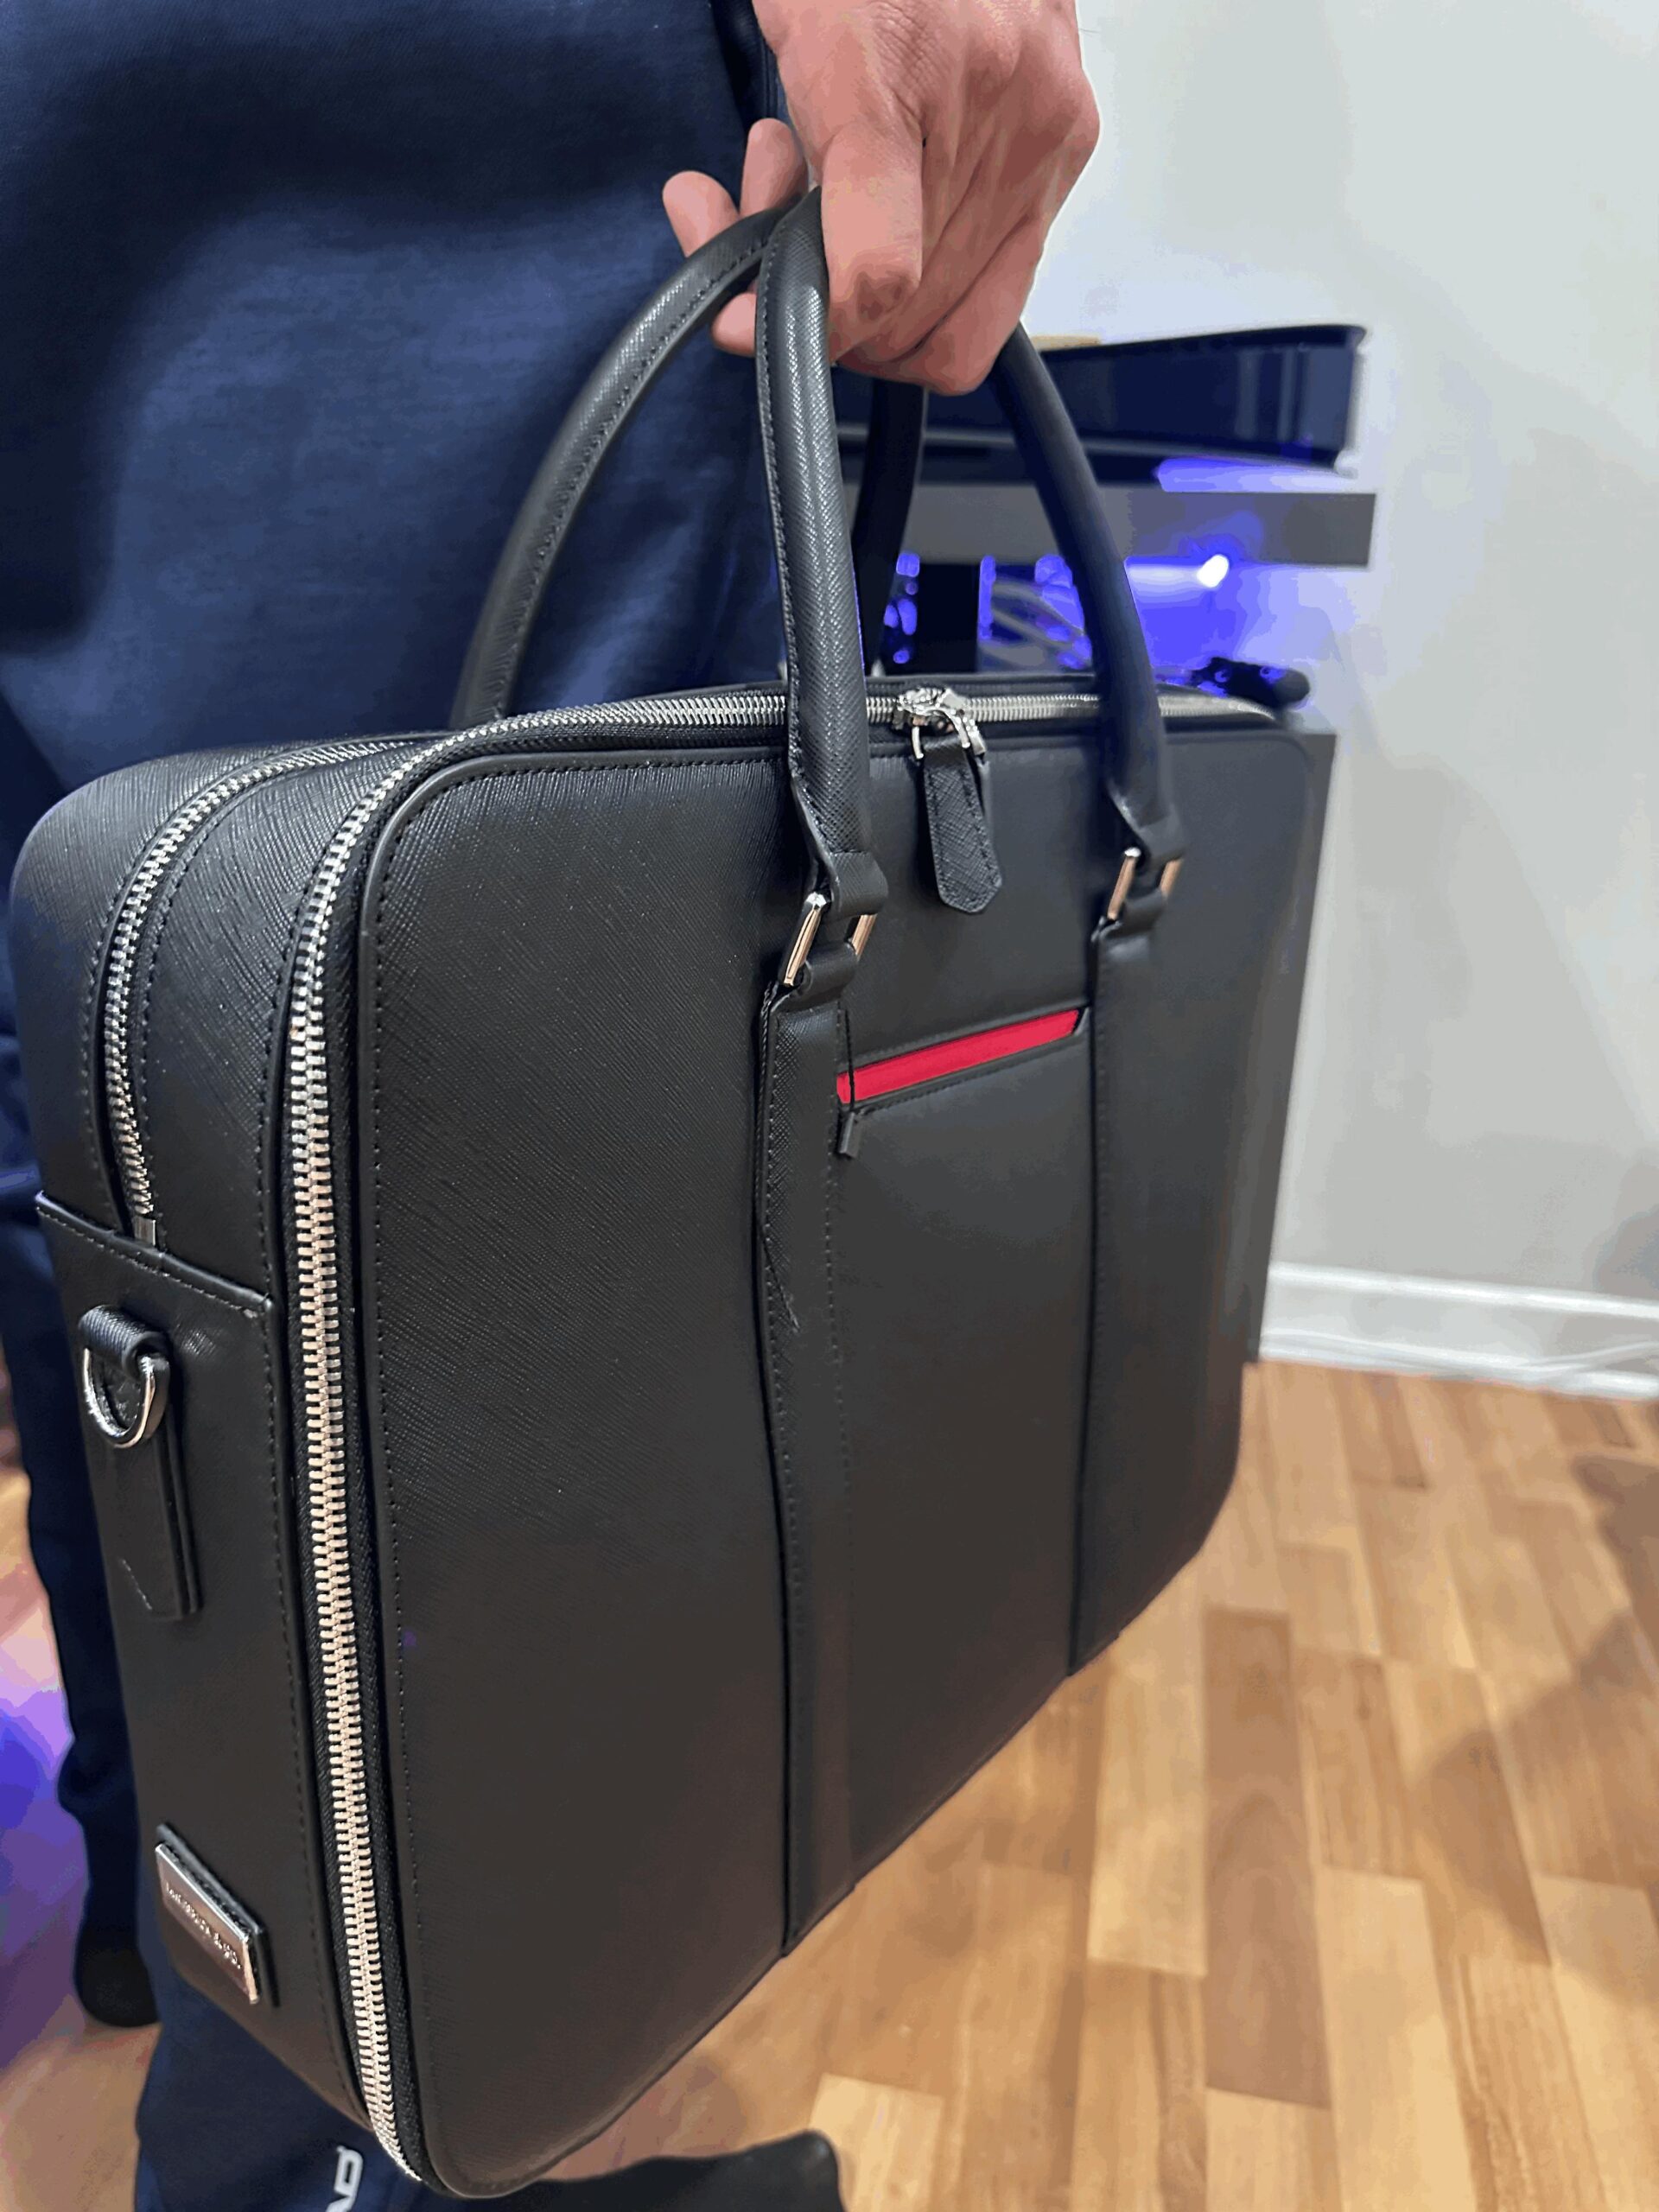 Classy Black Leather Double-Zip Laptop Briefcase Bag Review